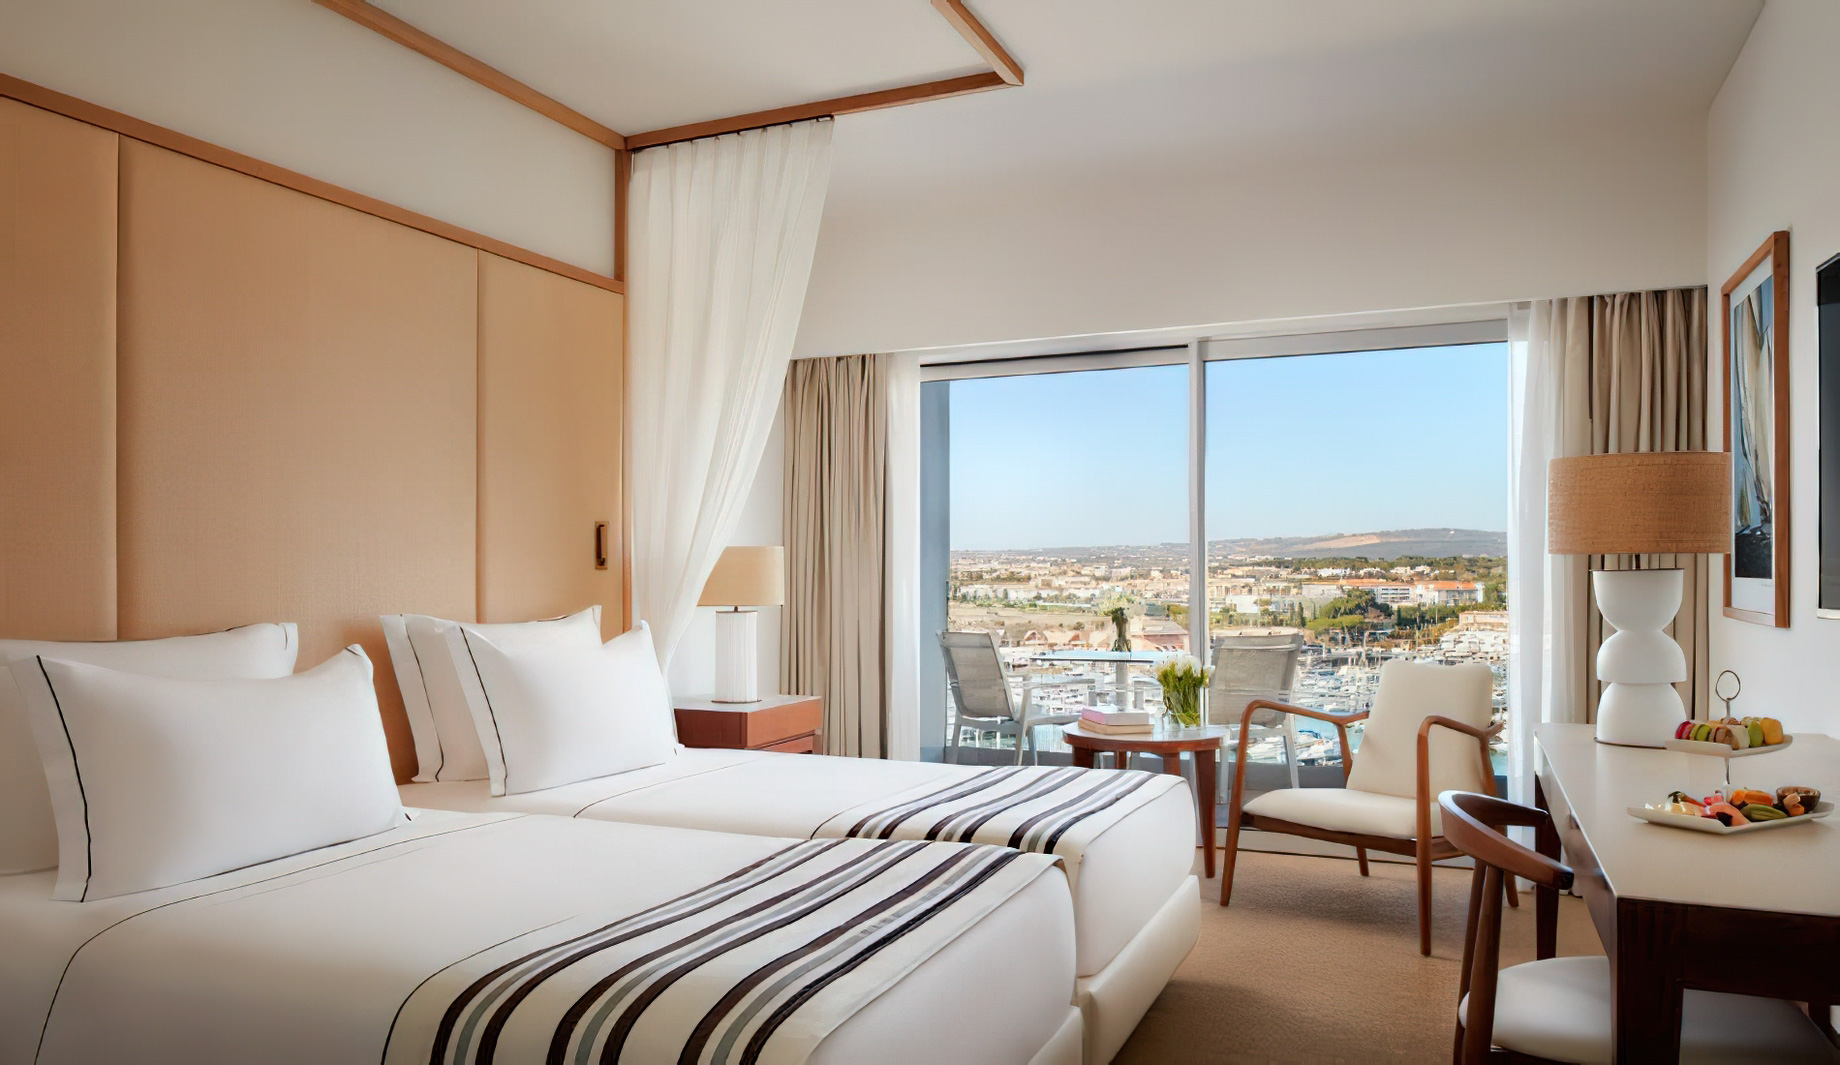 Tivoli Marina Vilamoura Algarve Resort - Portugal - Premium Room Marina View